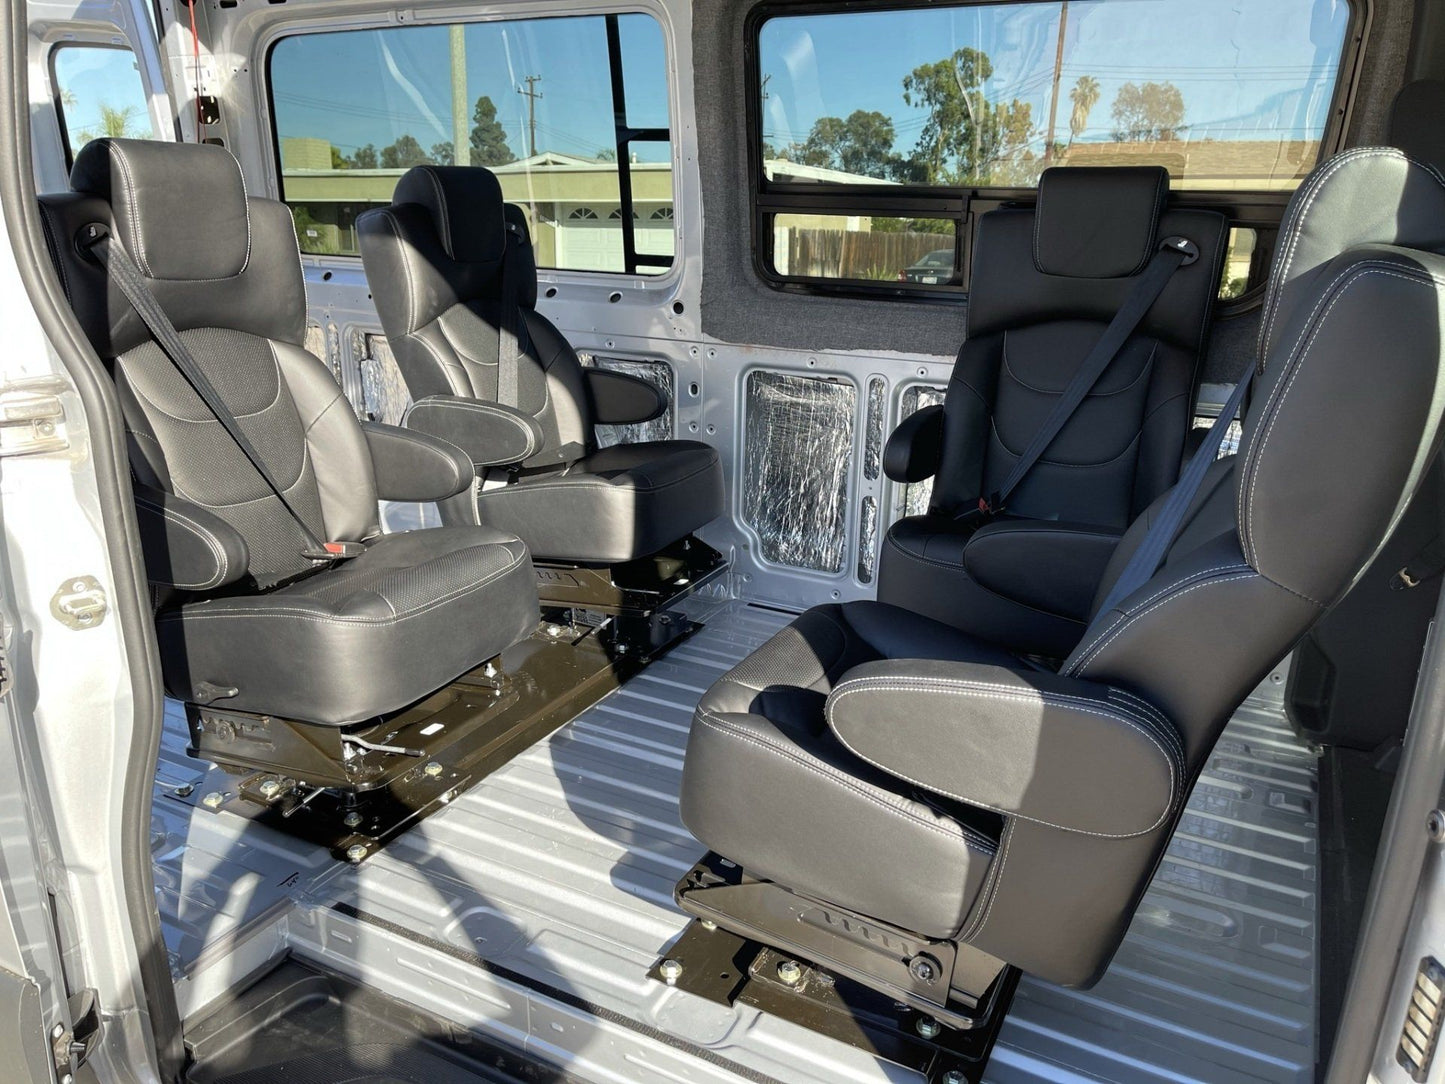 JMG Dual Swivel Captain Chairs for Sprinter / Transit Camper Van Conversions